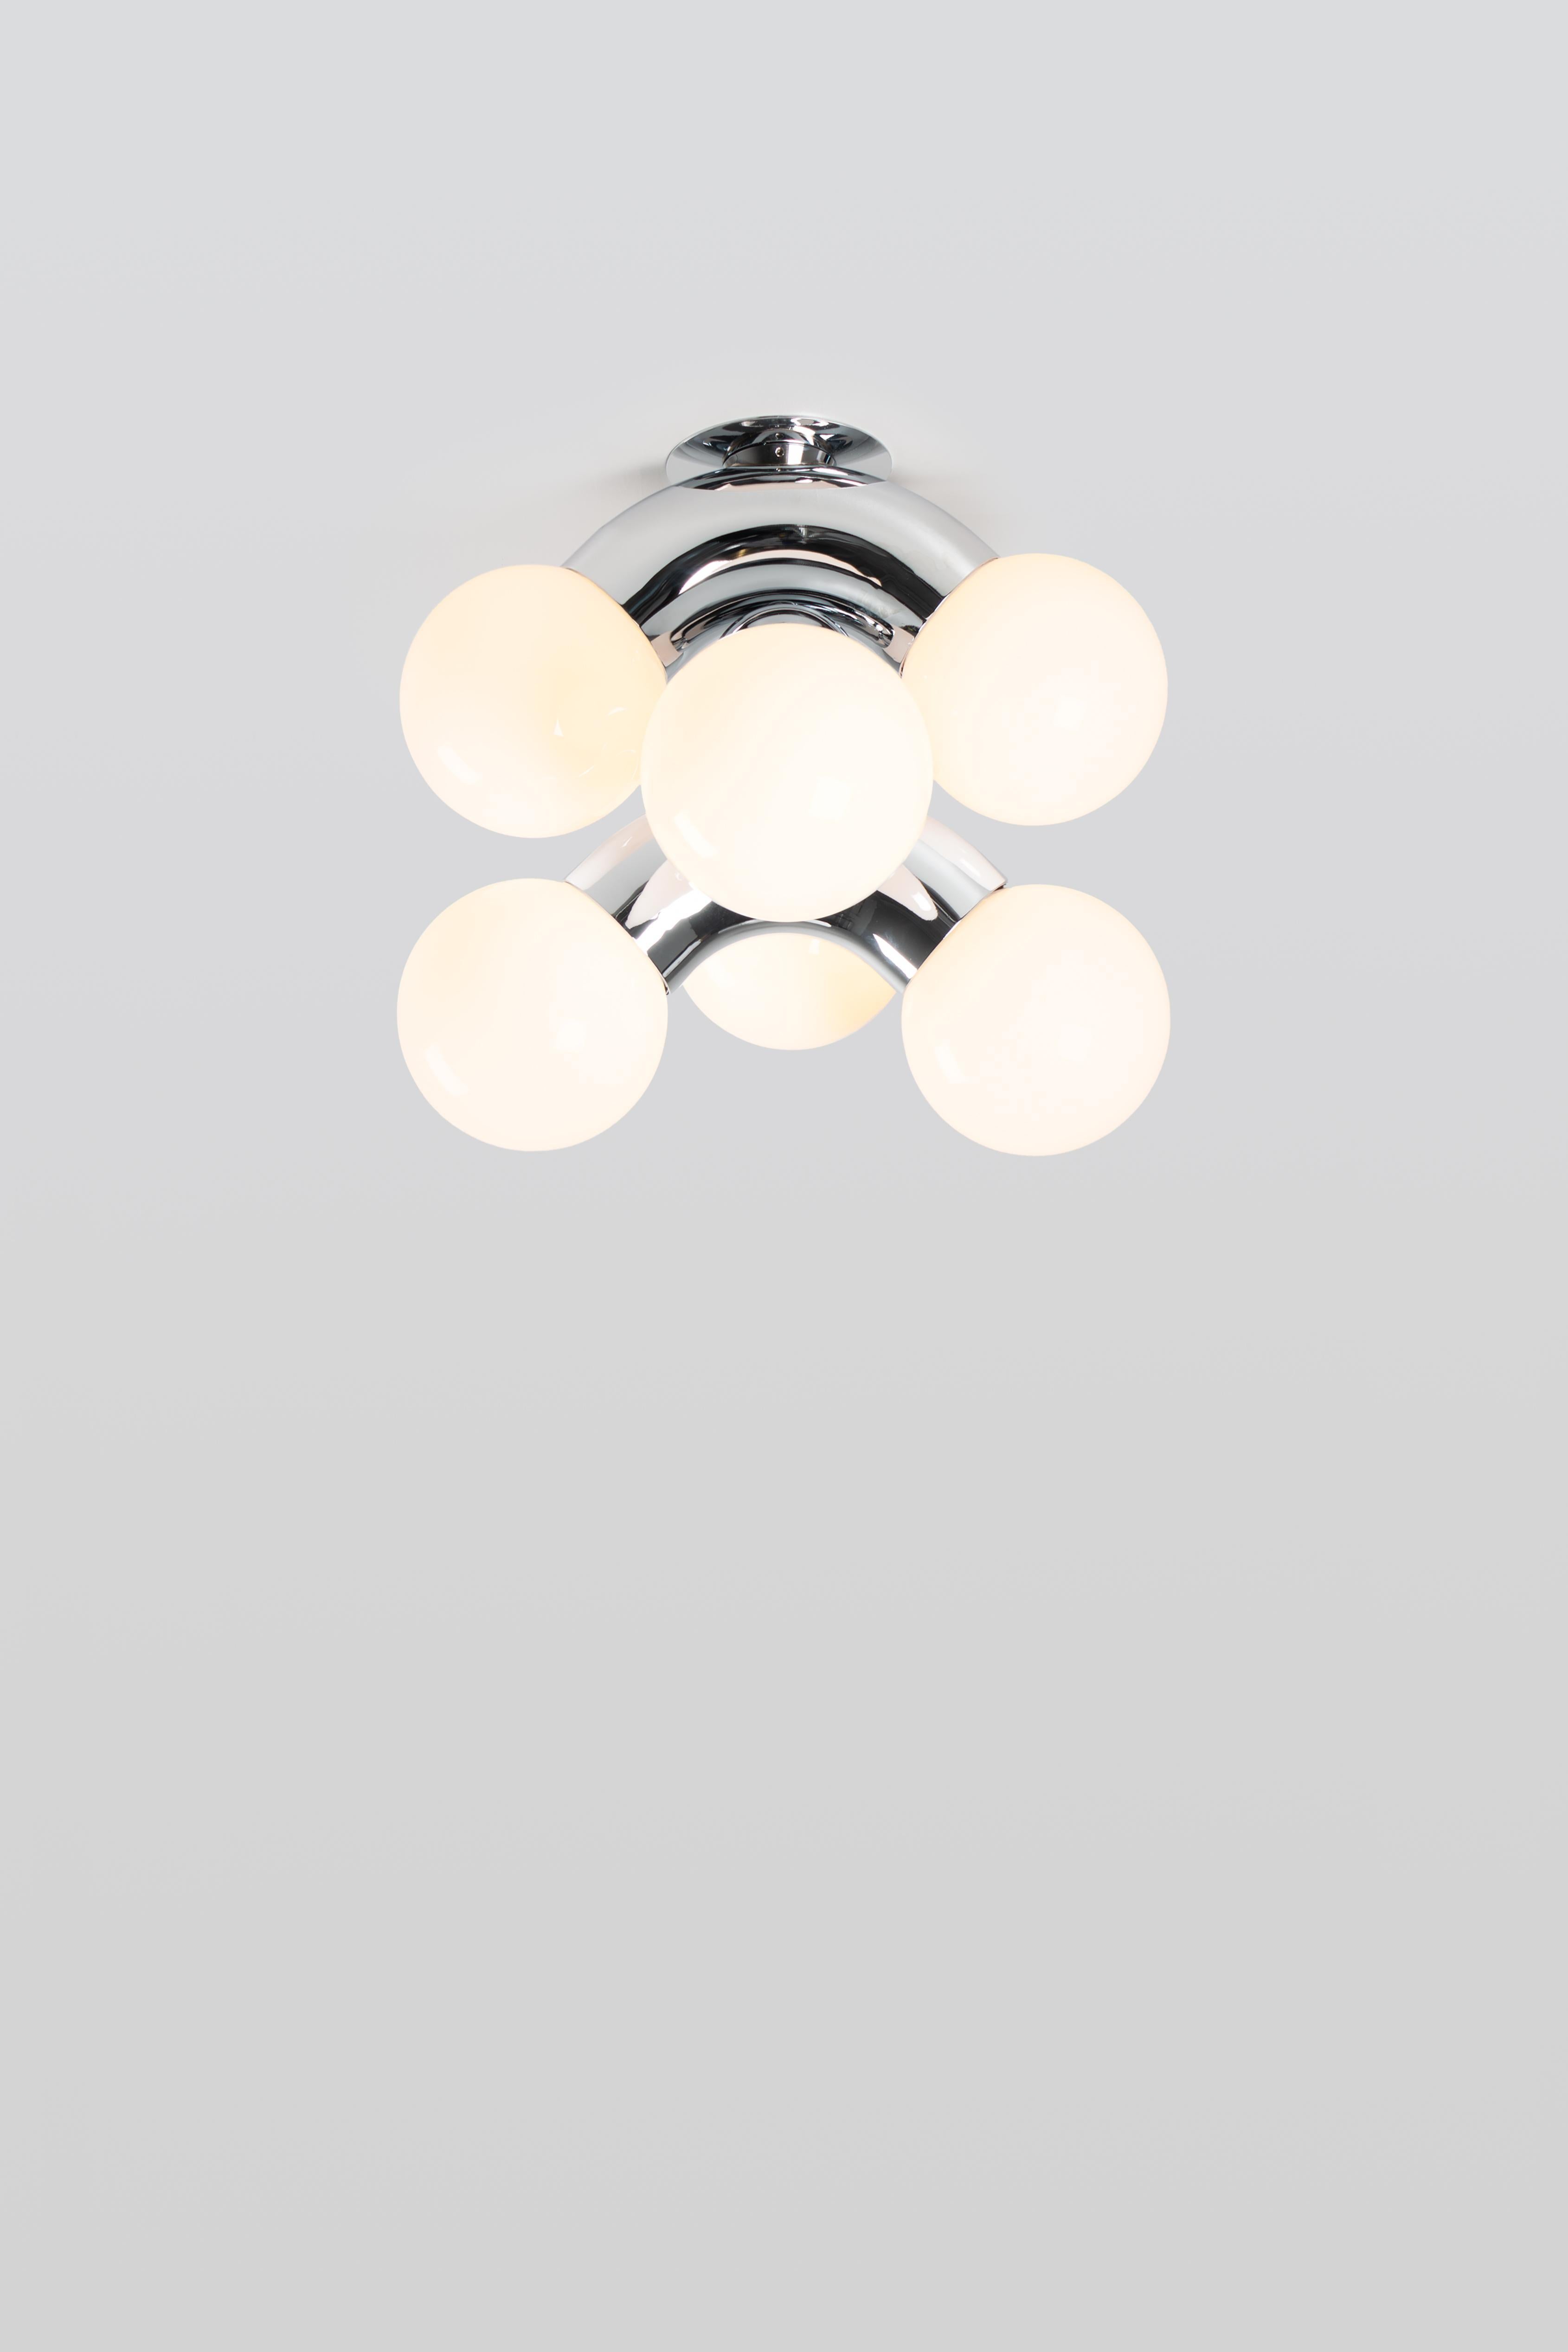 Canadian Contemporary Ceiling Lamp VINE 3-C, Chrome For Sale